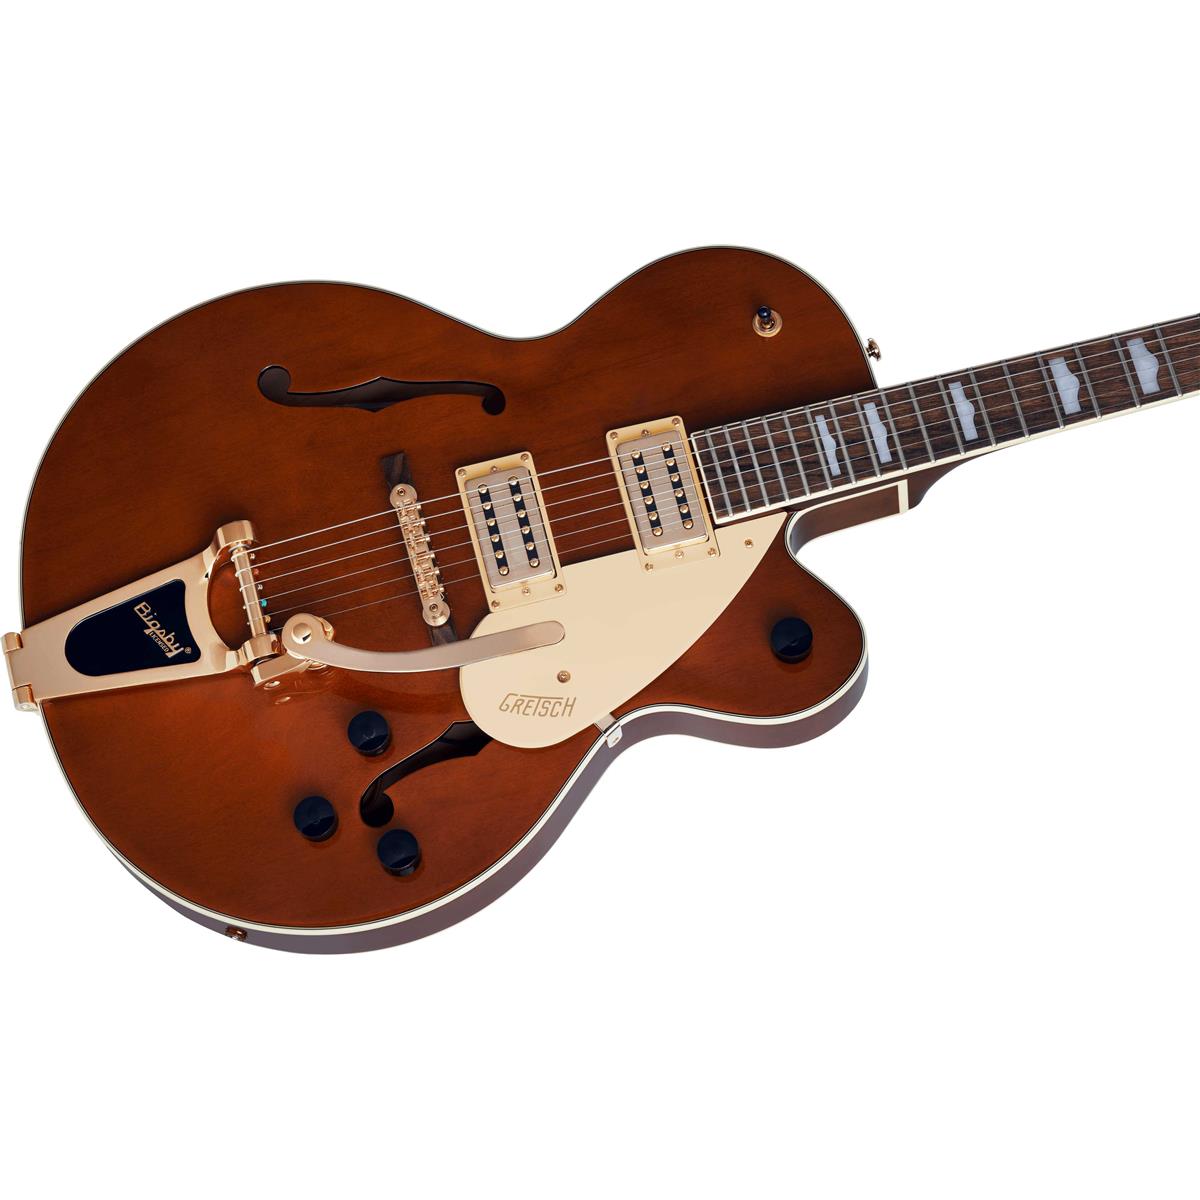 Gretsch G2410TG Hollow Body Single-Cut Bigsby Electric Guitar $299 + free s/h